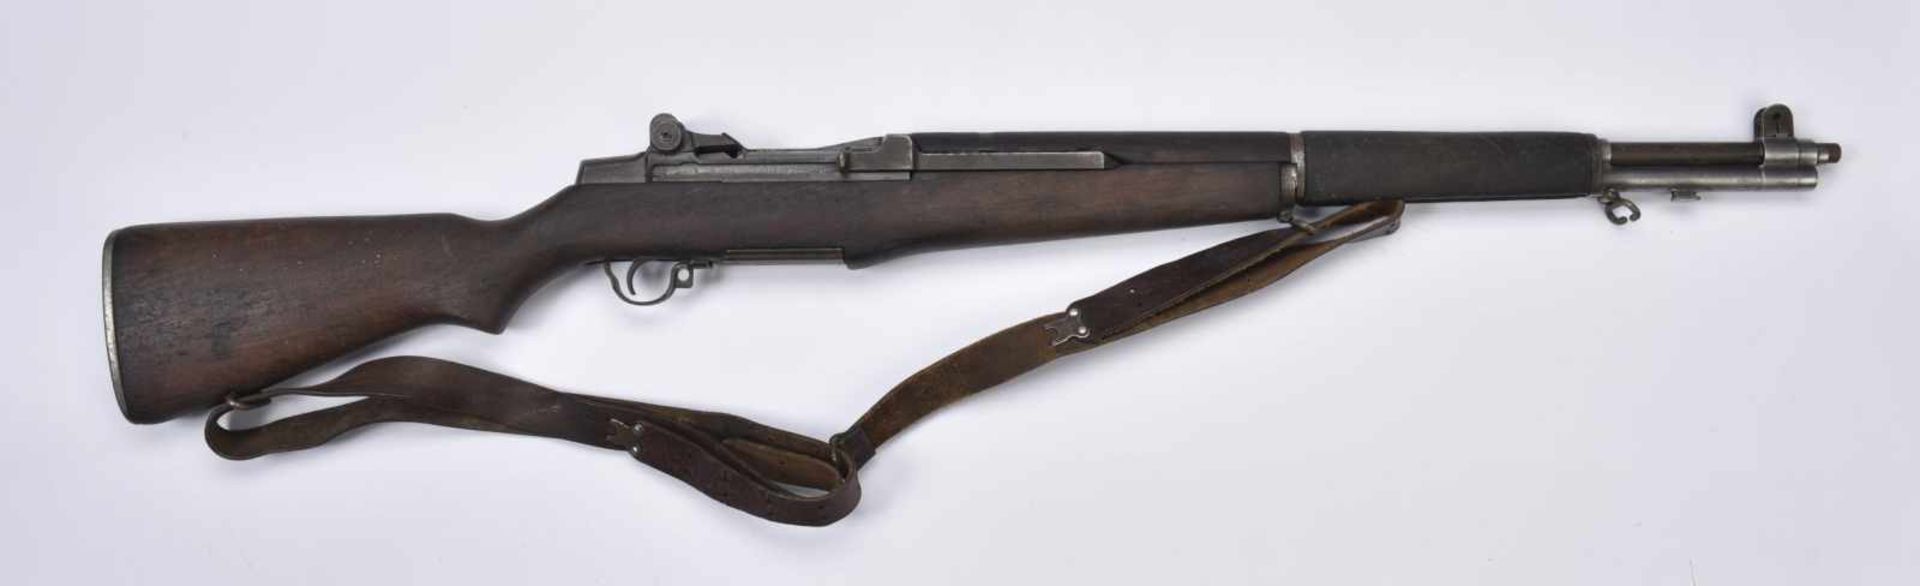 Fusil Garand calibre 30M1, fabrication « Springfield Armory », numéro « 2496224 ». Crosse en bois et